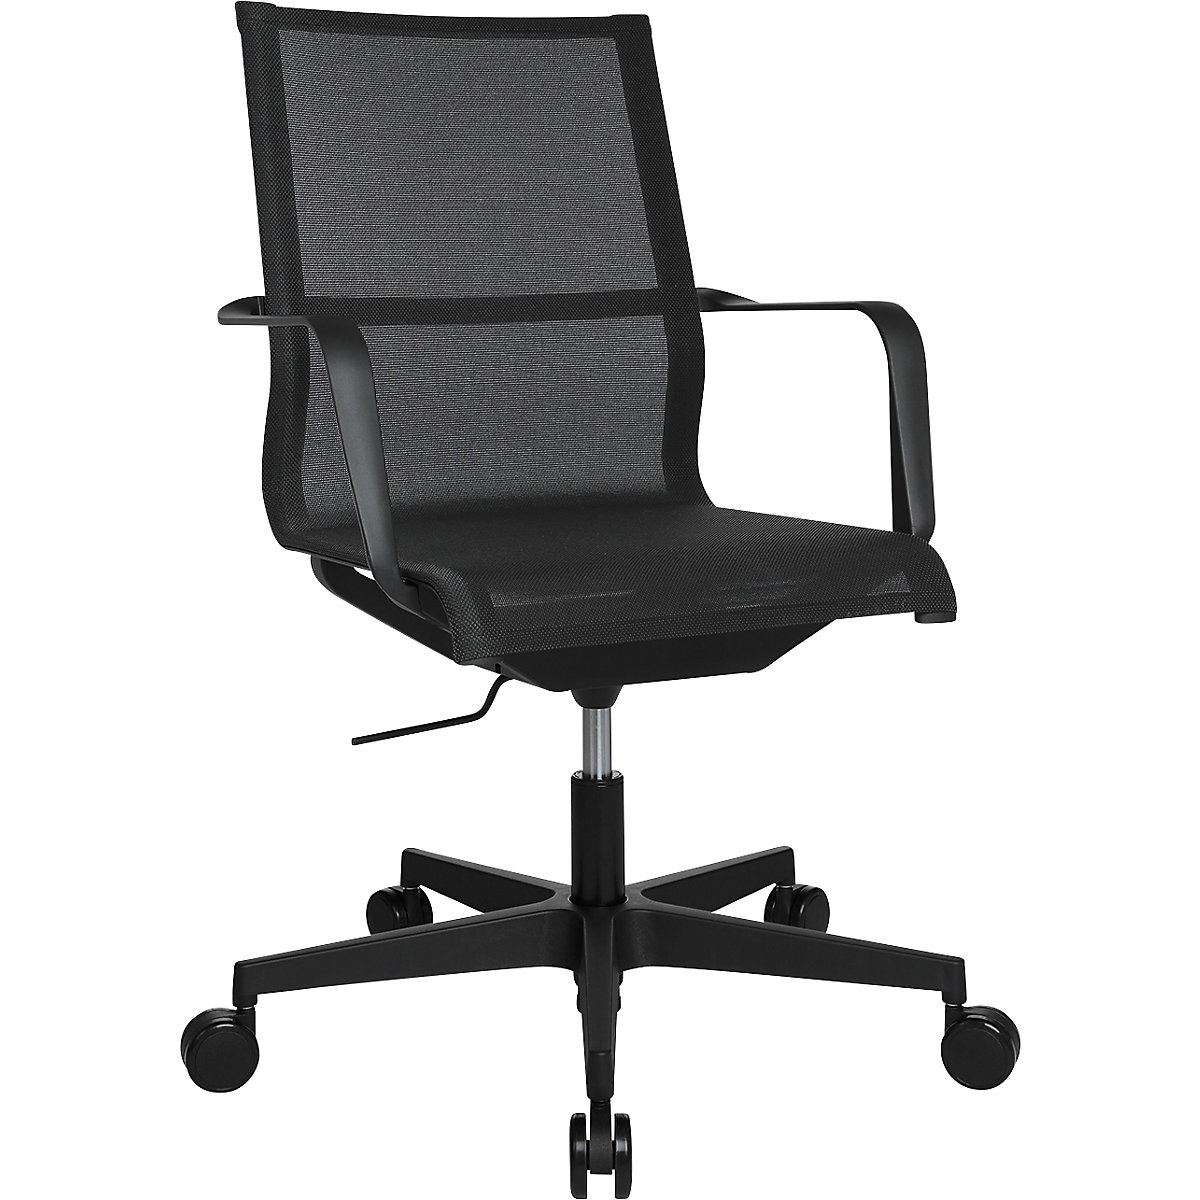 SITNESS LIFE 40 office swivel chair - Topstar